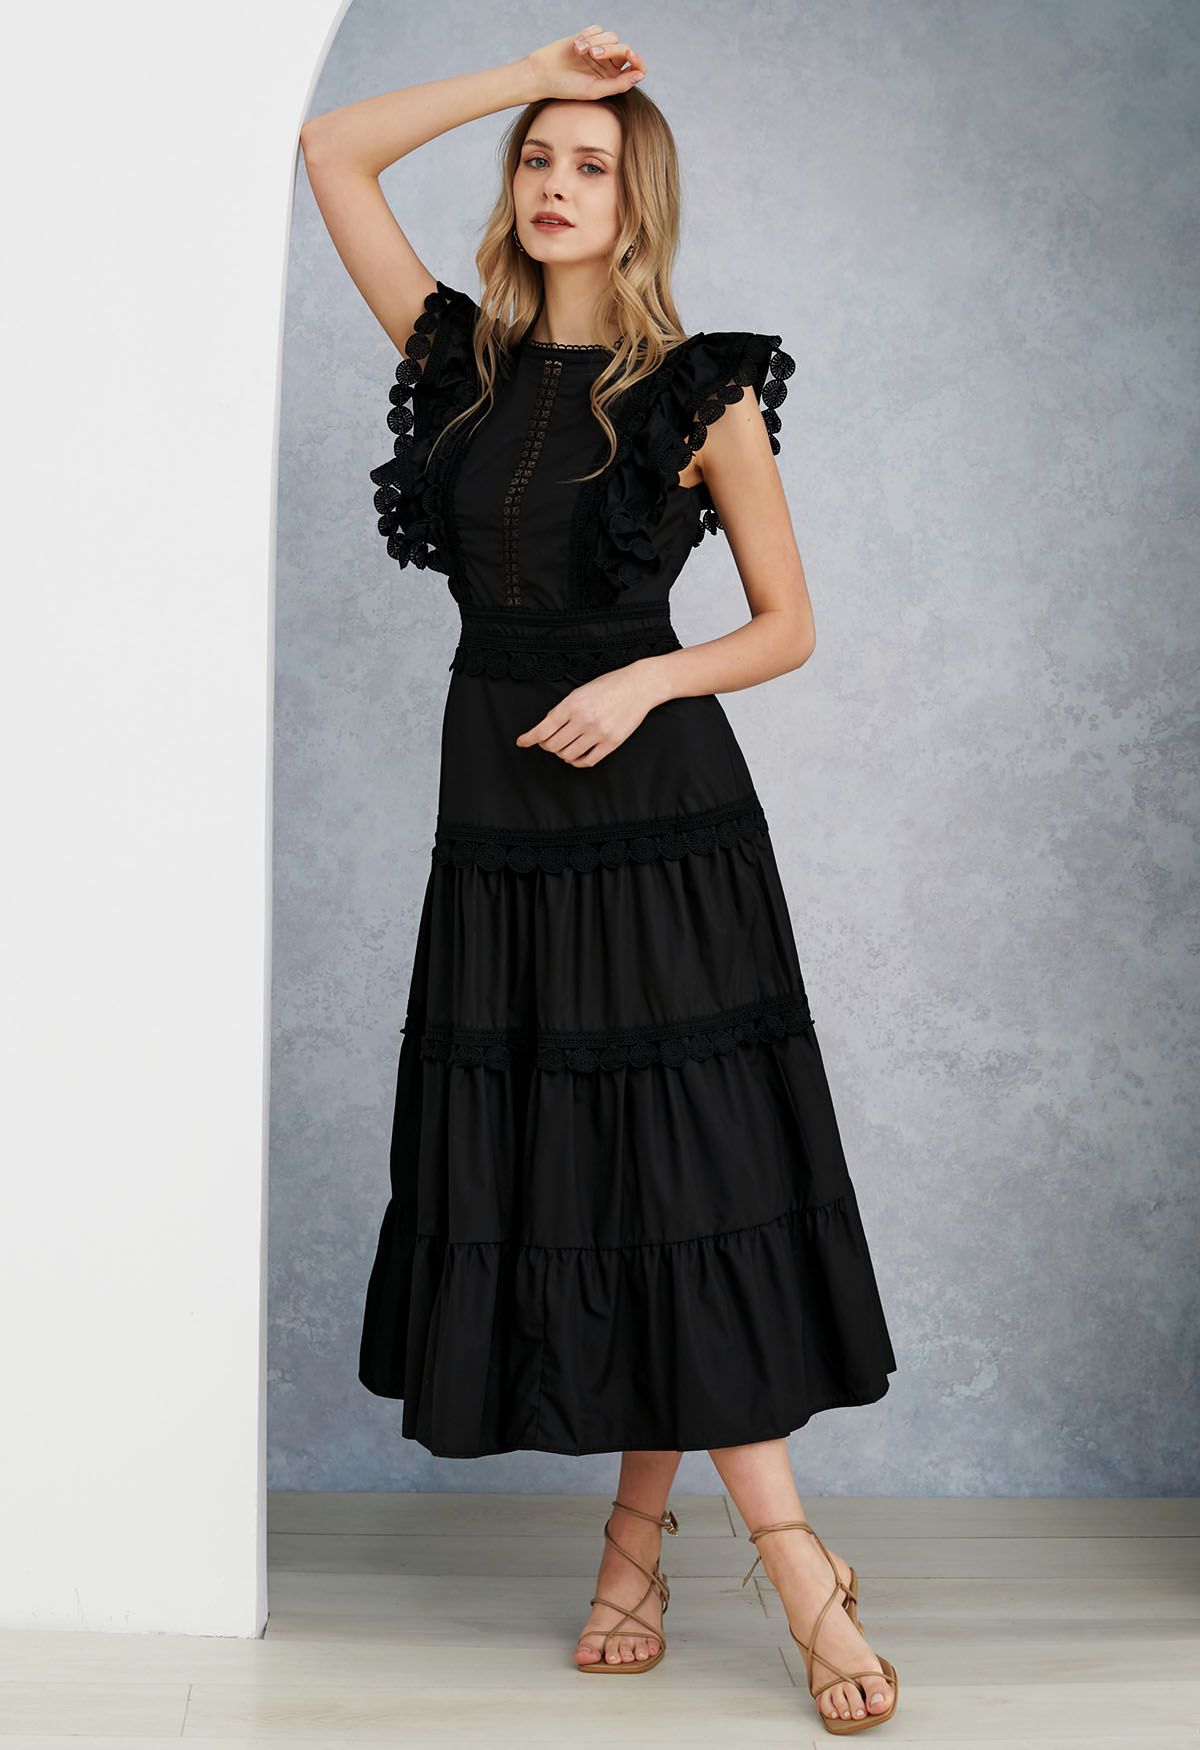 Crochet Trim Sleeveless Midi Dress in Black